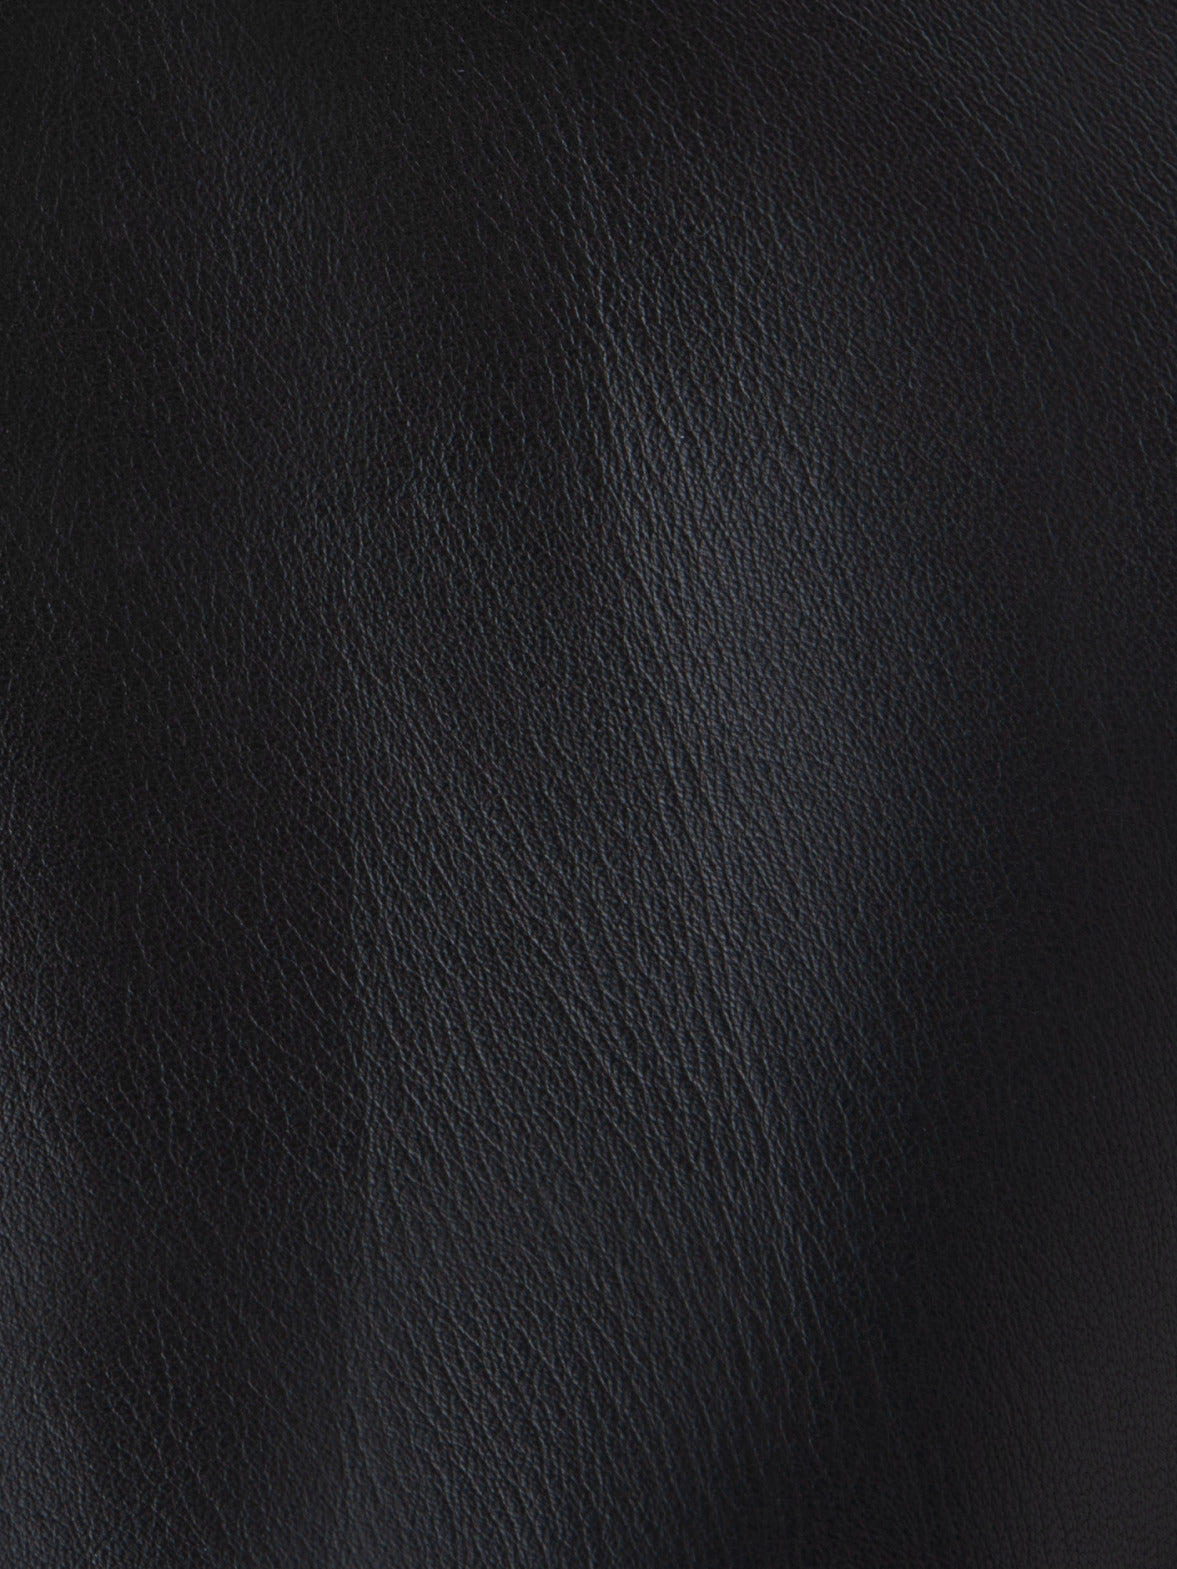 Gradient Leather Blouson - Ready to Wear